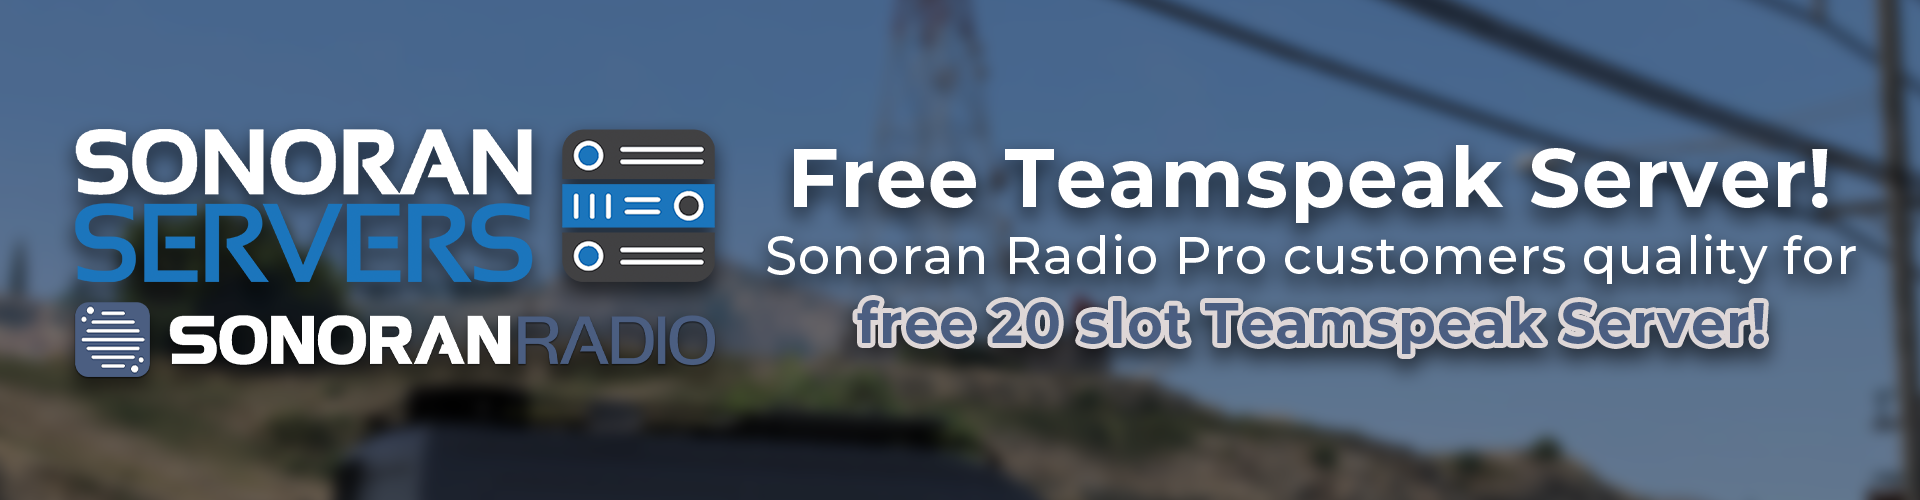 Free TeamSpeak 3 Server with Sonoran Radio Pro!